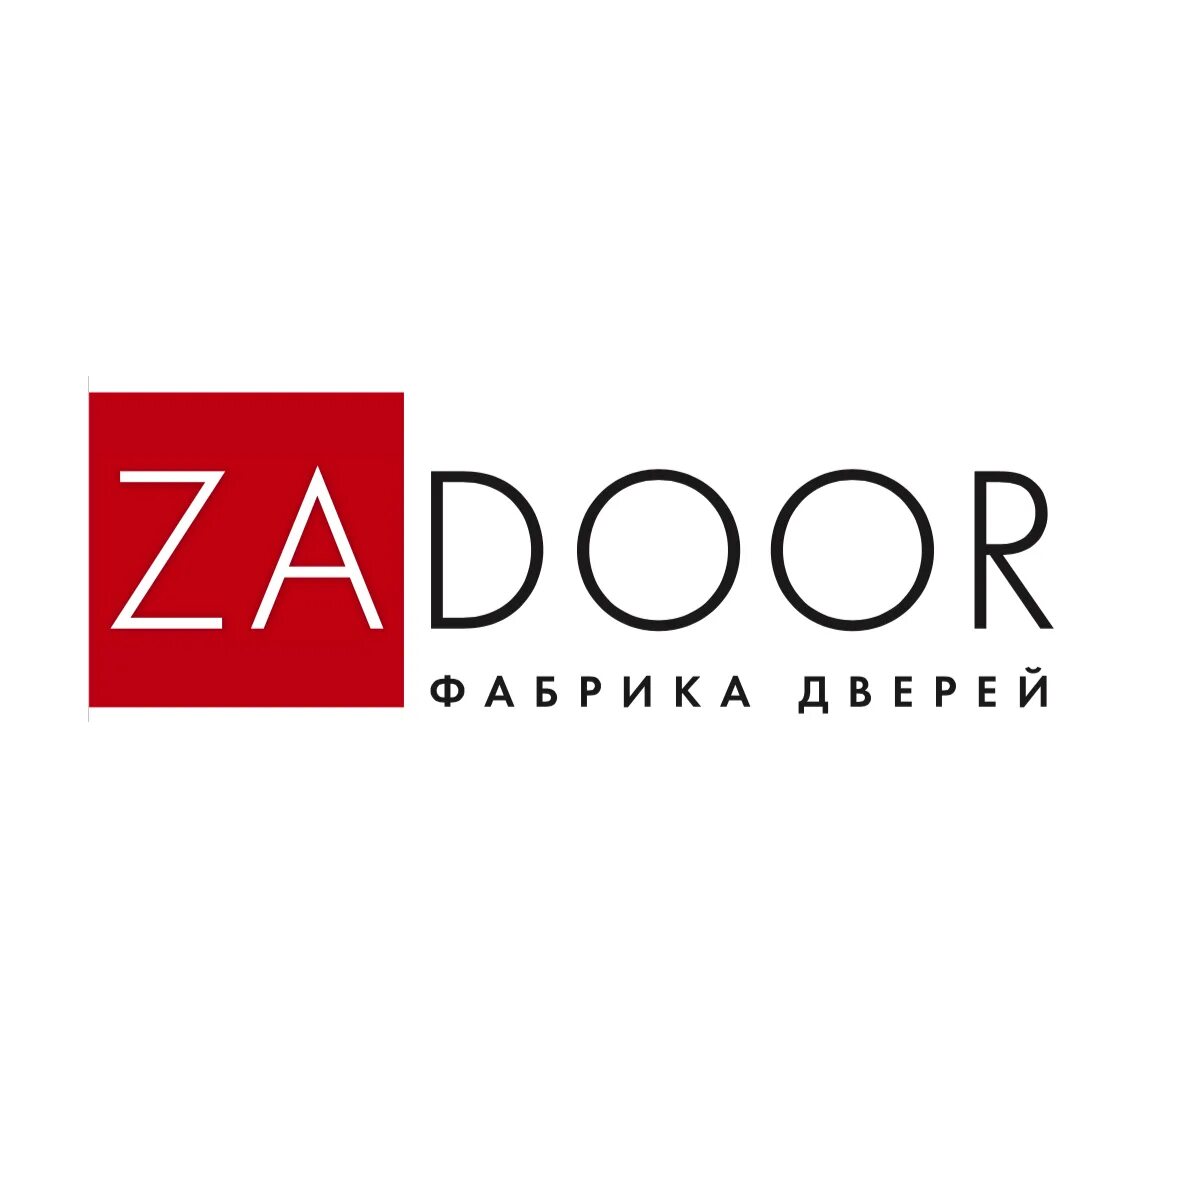 Сайт дверей задор. Фабрика Zadoor логотип. Zadoor двери. Двери Задор лого. Фабрика дверей Задор.